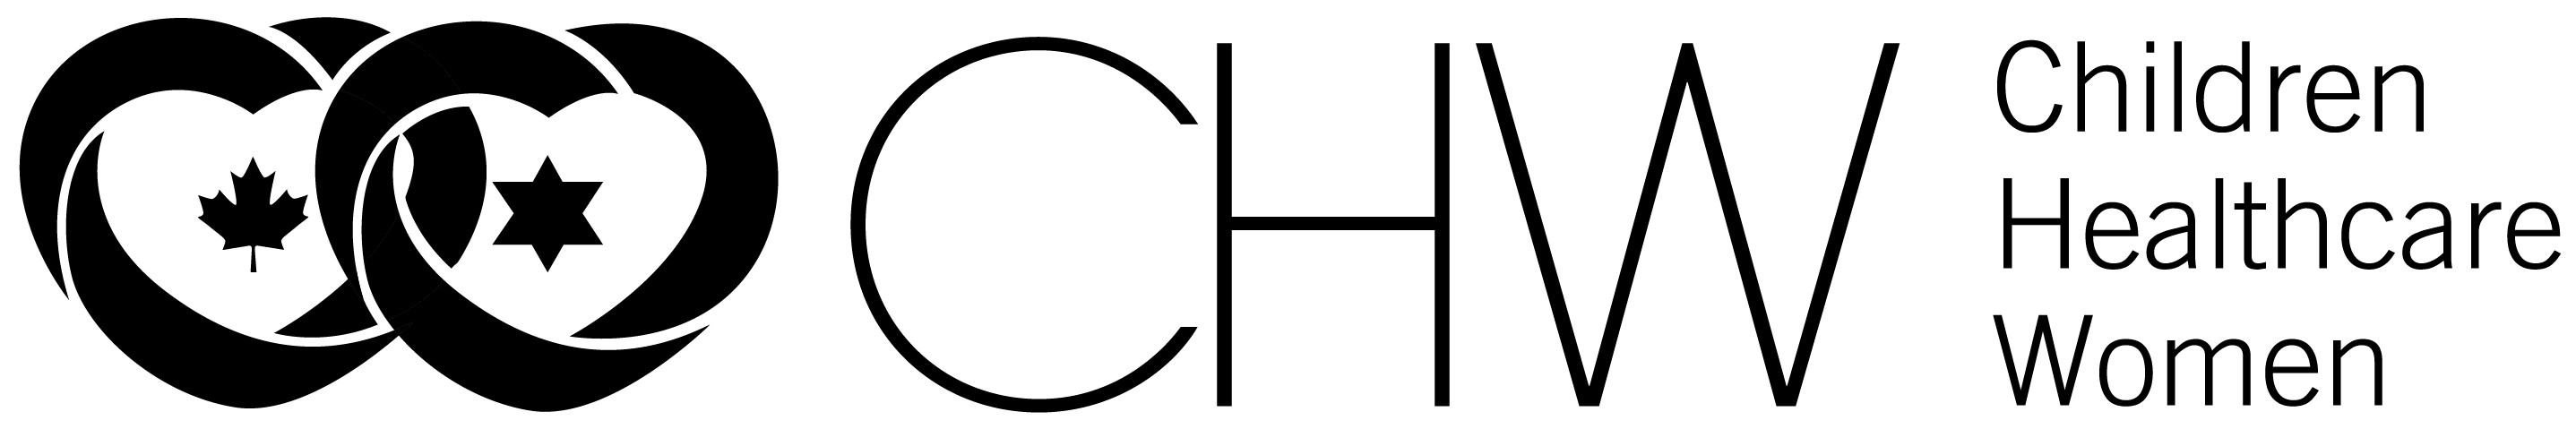 CHW-Full-logo-2019-04-Black.png